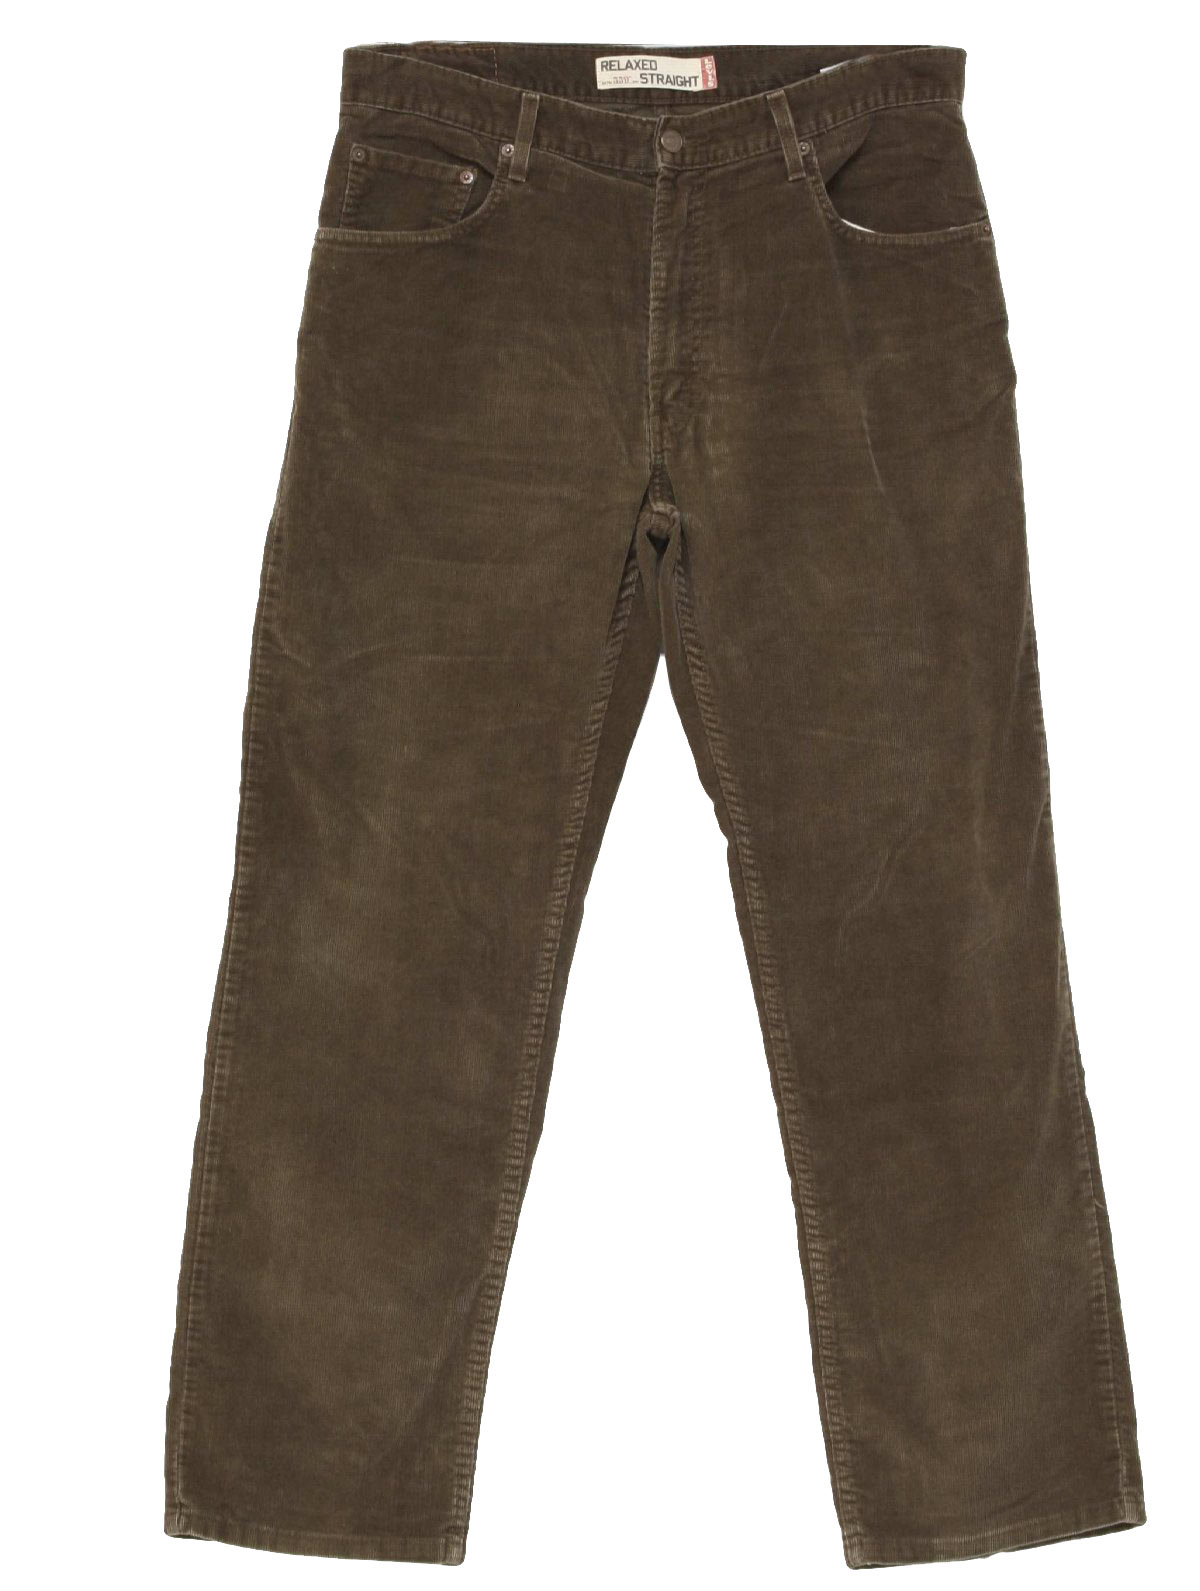 90s Vintage Levis 559 Pants: 90s -Levis 559- Mens brown cotton corduroy  straight leg jeans-cut pants with zipper fly, plain hems, inset front  pockets, back patch pockets and standard size belt loops.